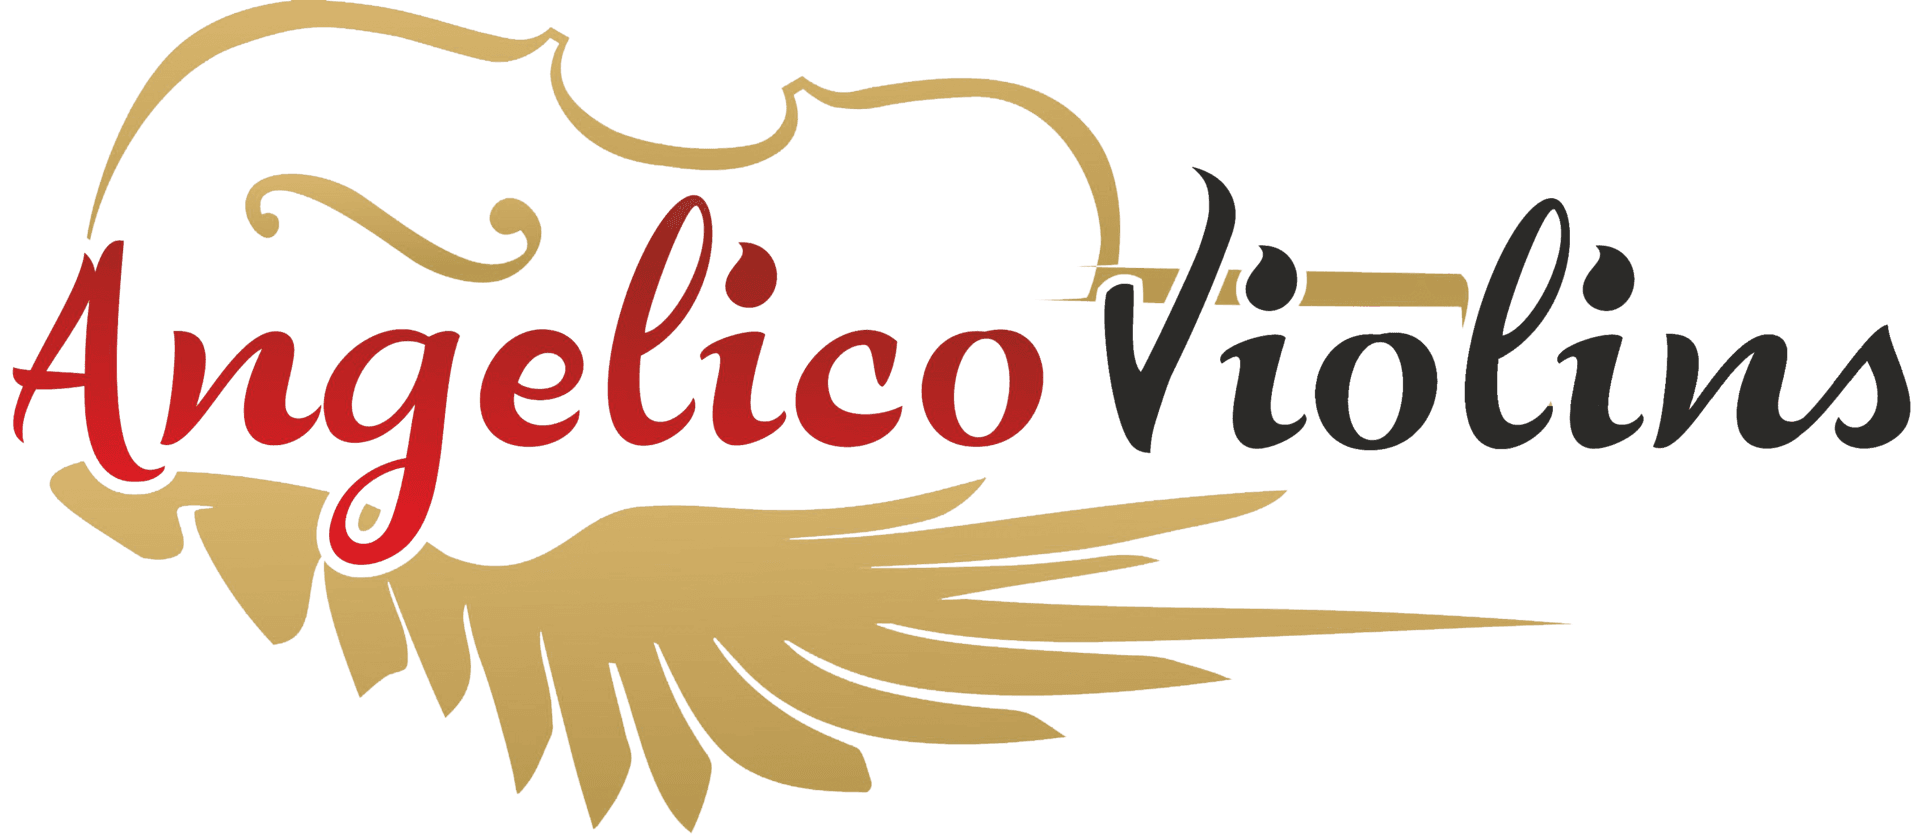 Angelico Violins - Logo